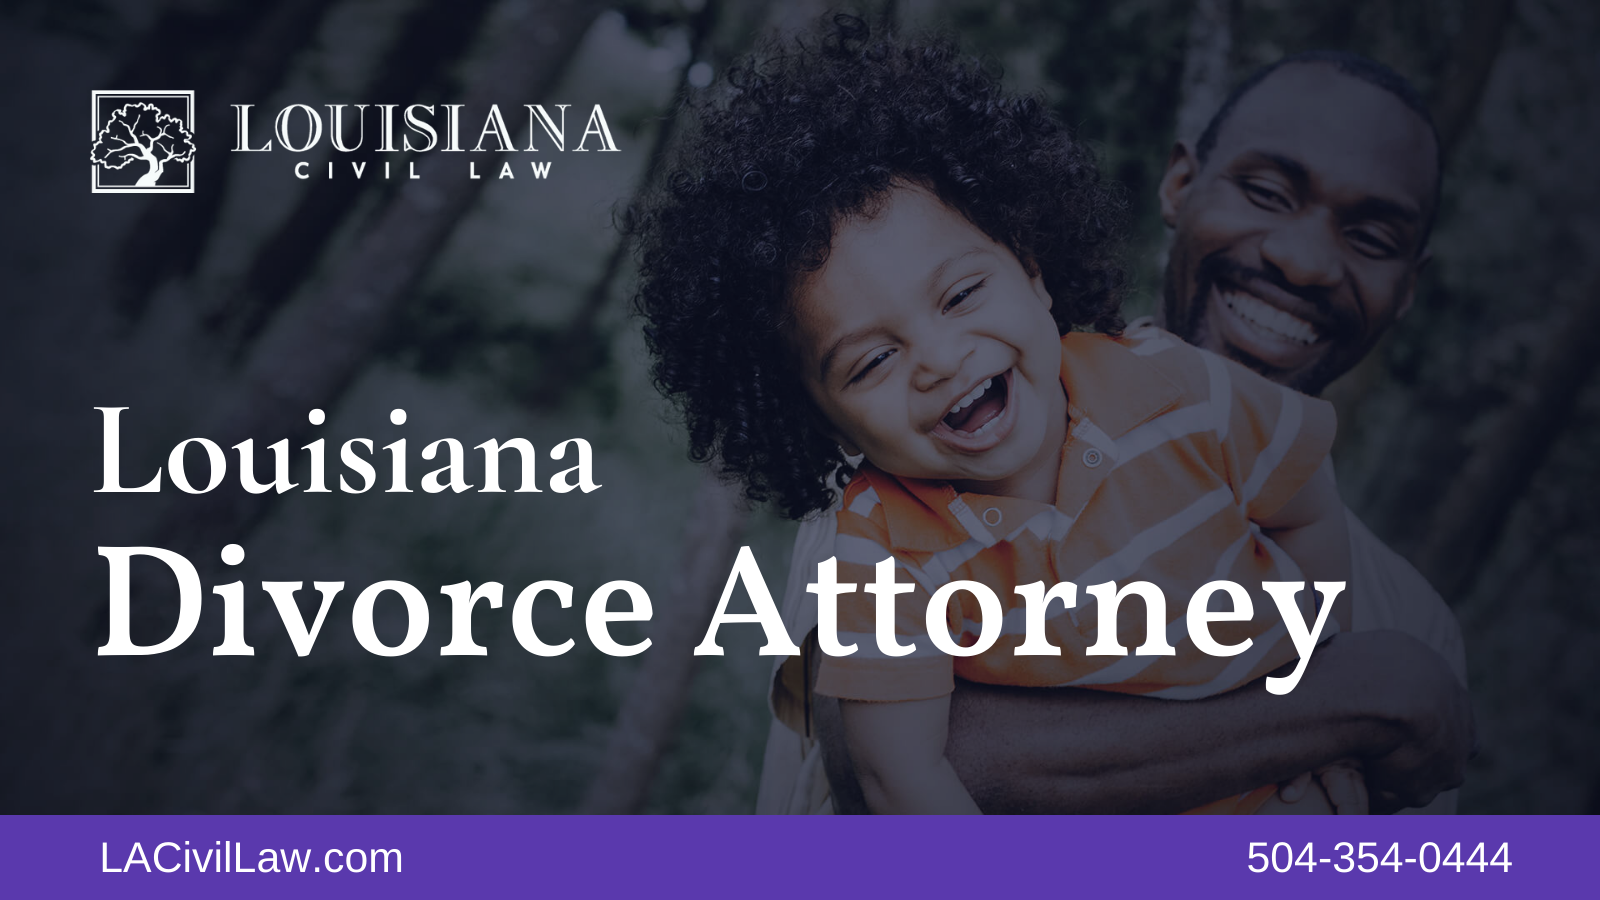 Louisiana Divorce Attorney Louisiana Civil Law New Orleans Divorce Lawyer 